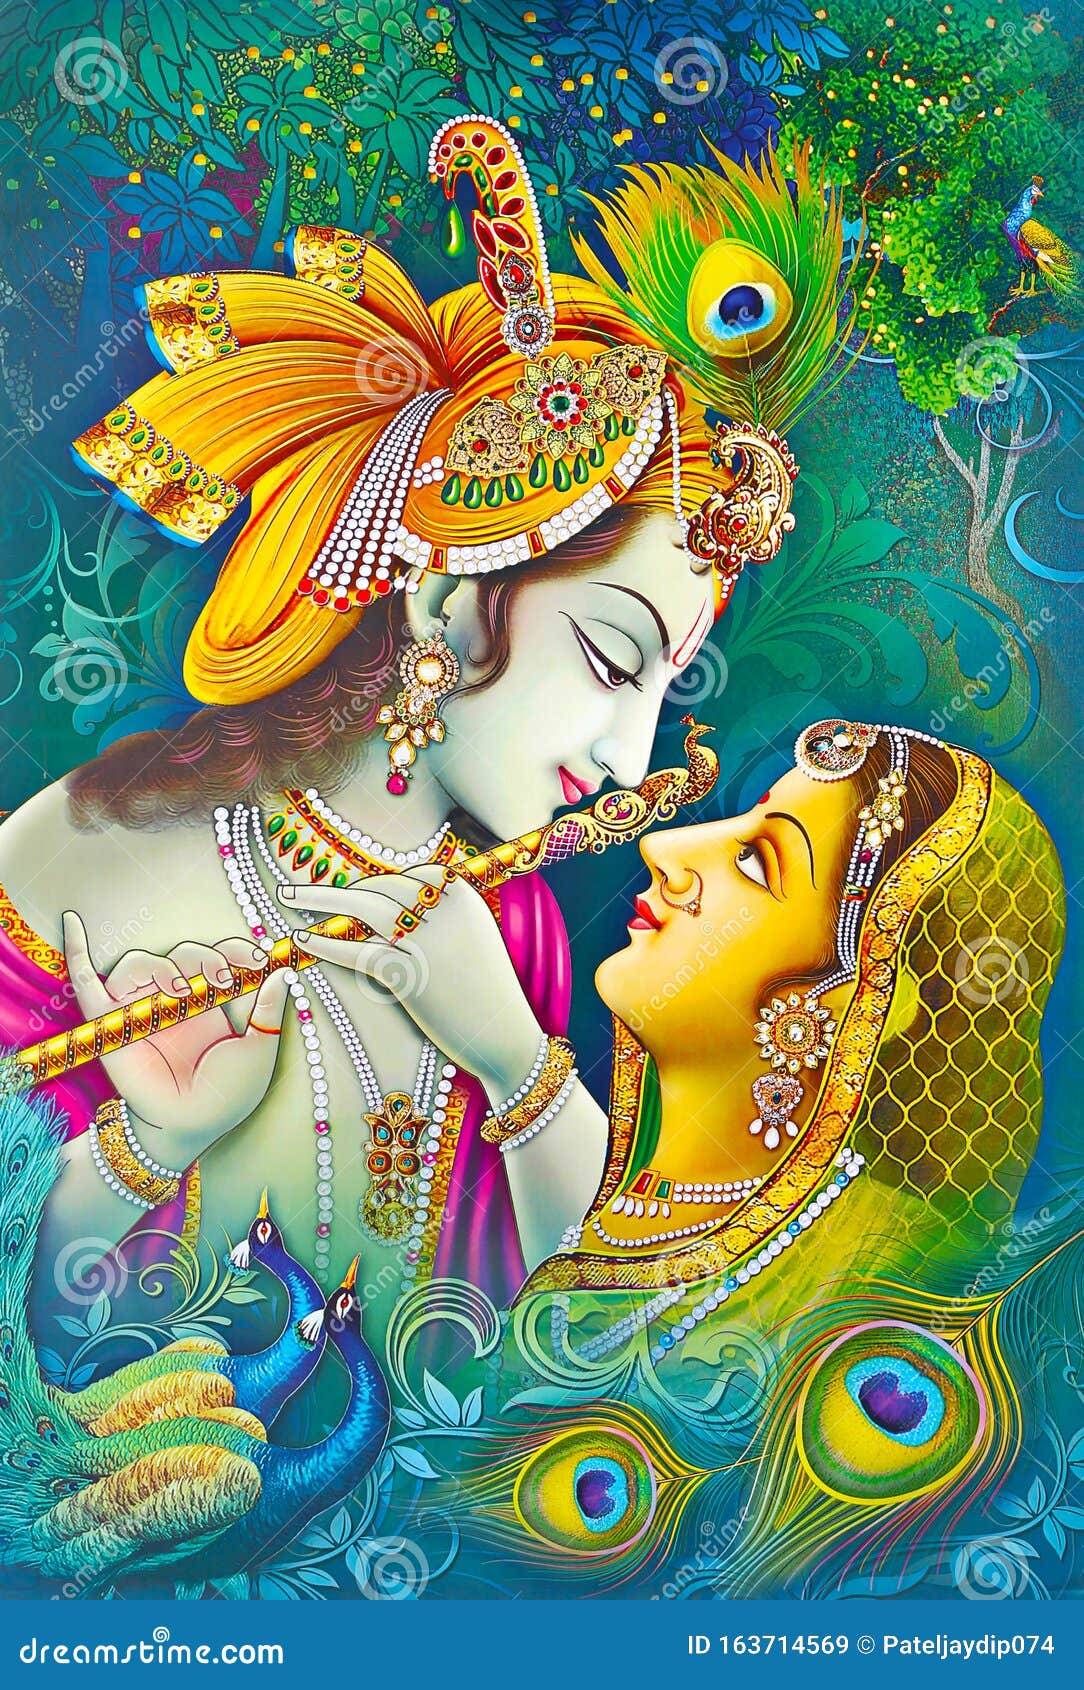 14,672 Krishna Photos - Free & Royalty-Free Stock Photos from Dreamstime